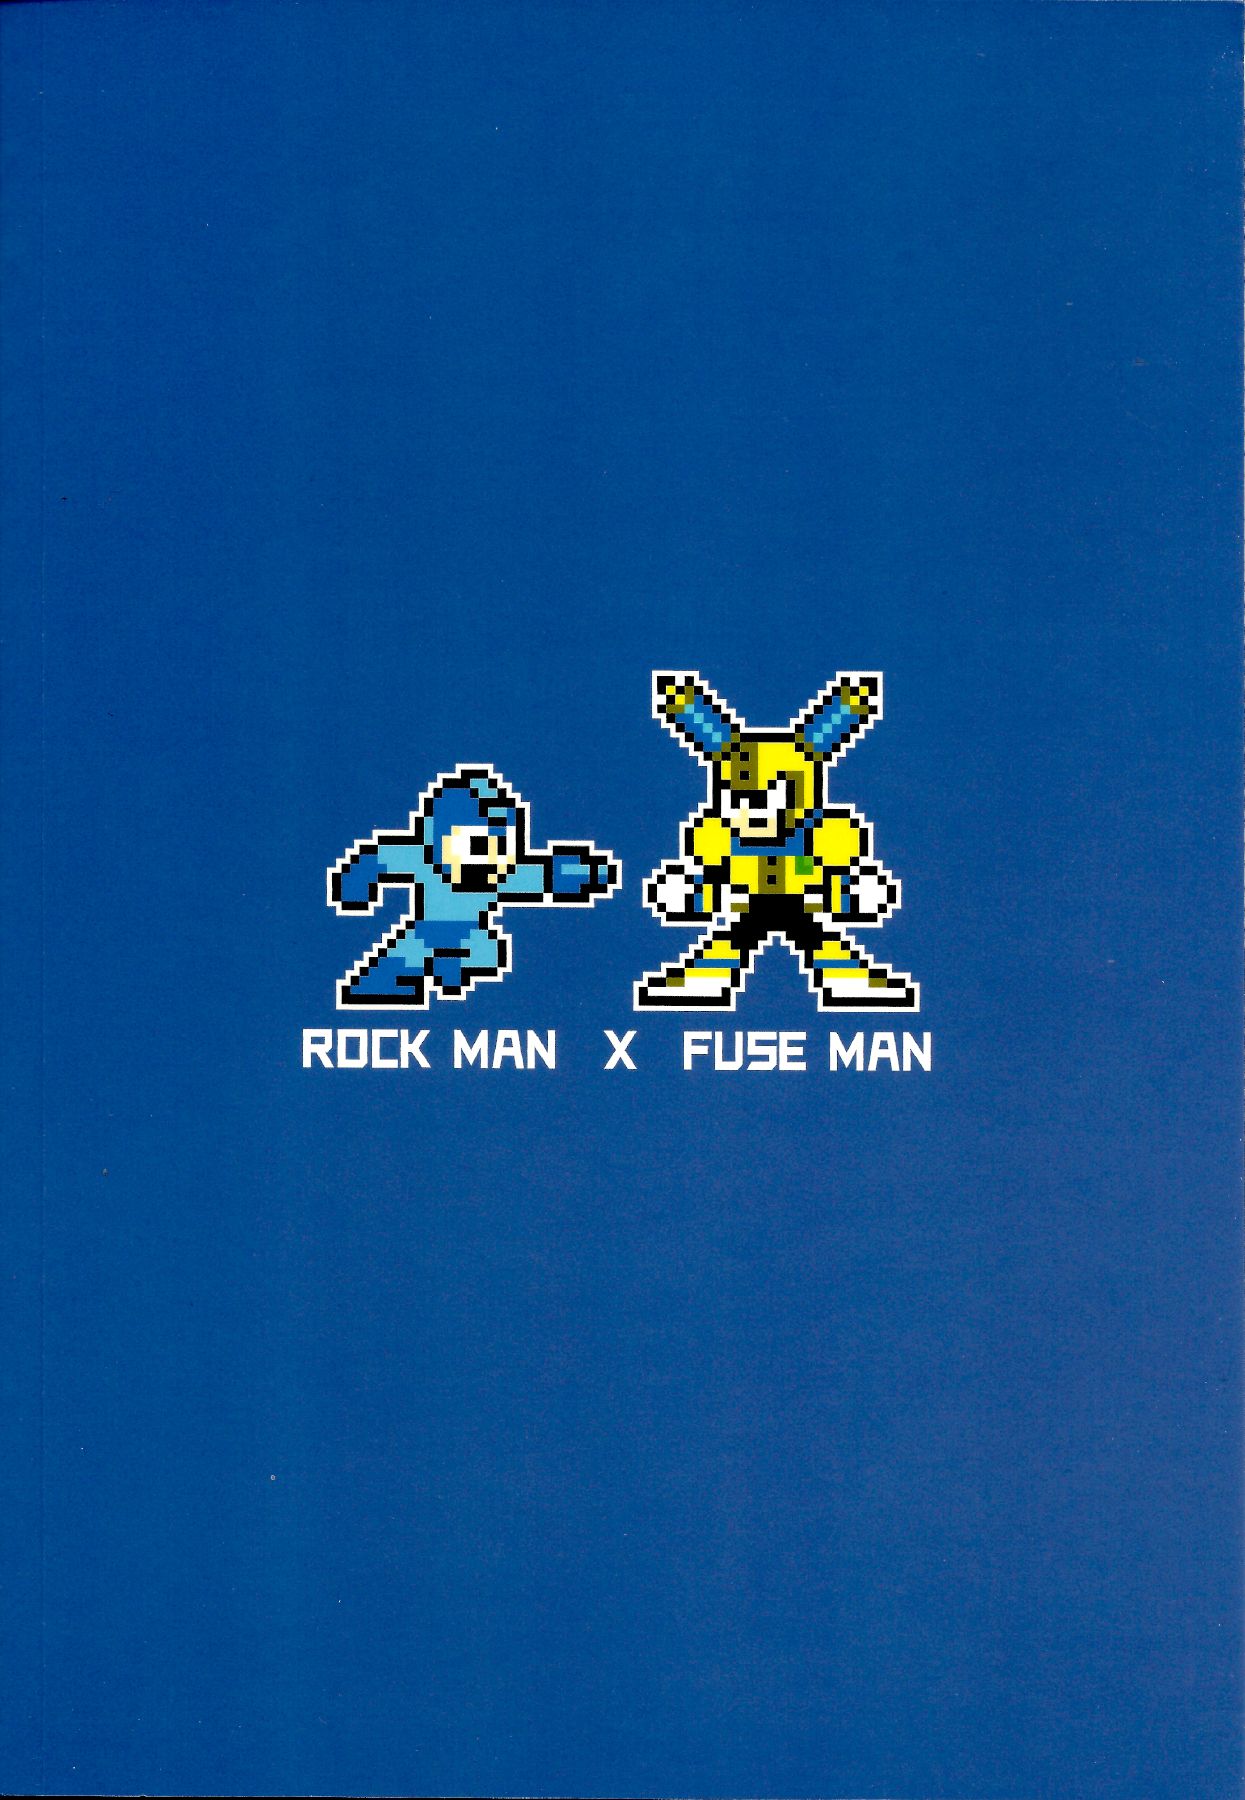 (Finish Prison) Luòkè rén 11-FUSEMAN gōnglüè běn | "Rockman 11-FUSEMAN Raiders" (Mega Man) (完獄) 洛克人11-FUSEMAN攻略本 (洛克人)